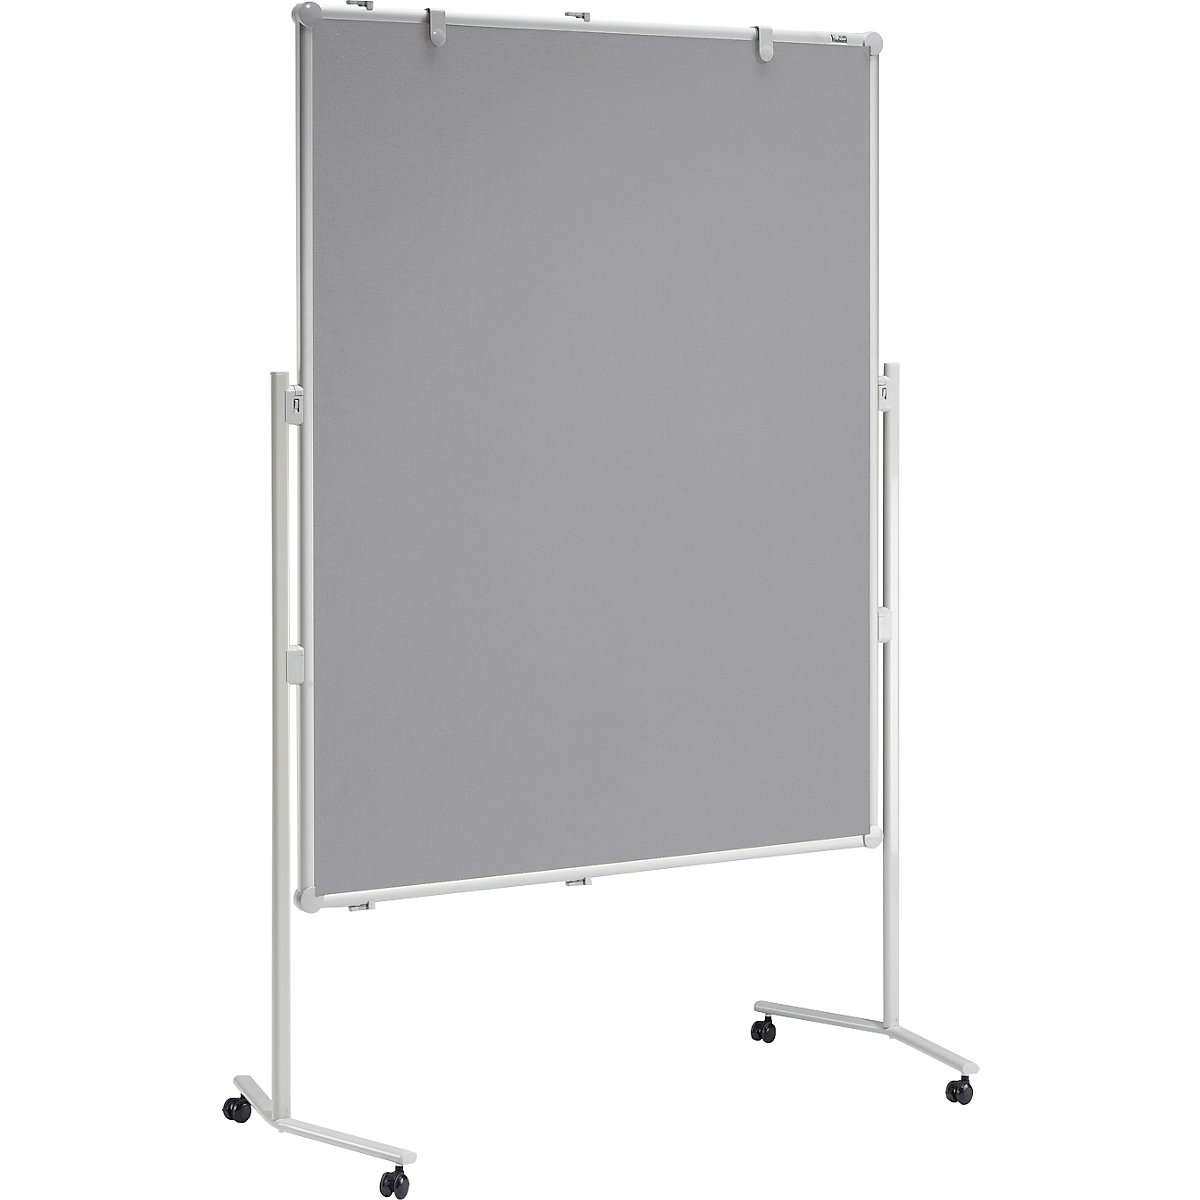 MAULpro presentation board – MAUL, fabric surface, grey, WxH 1200 x 1500 mm-5